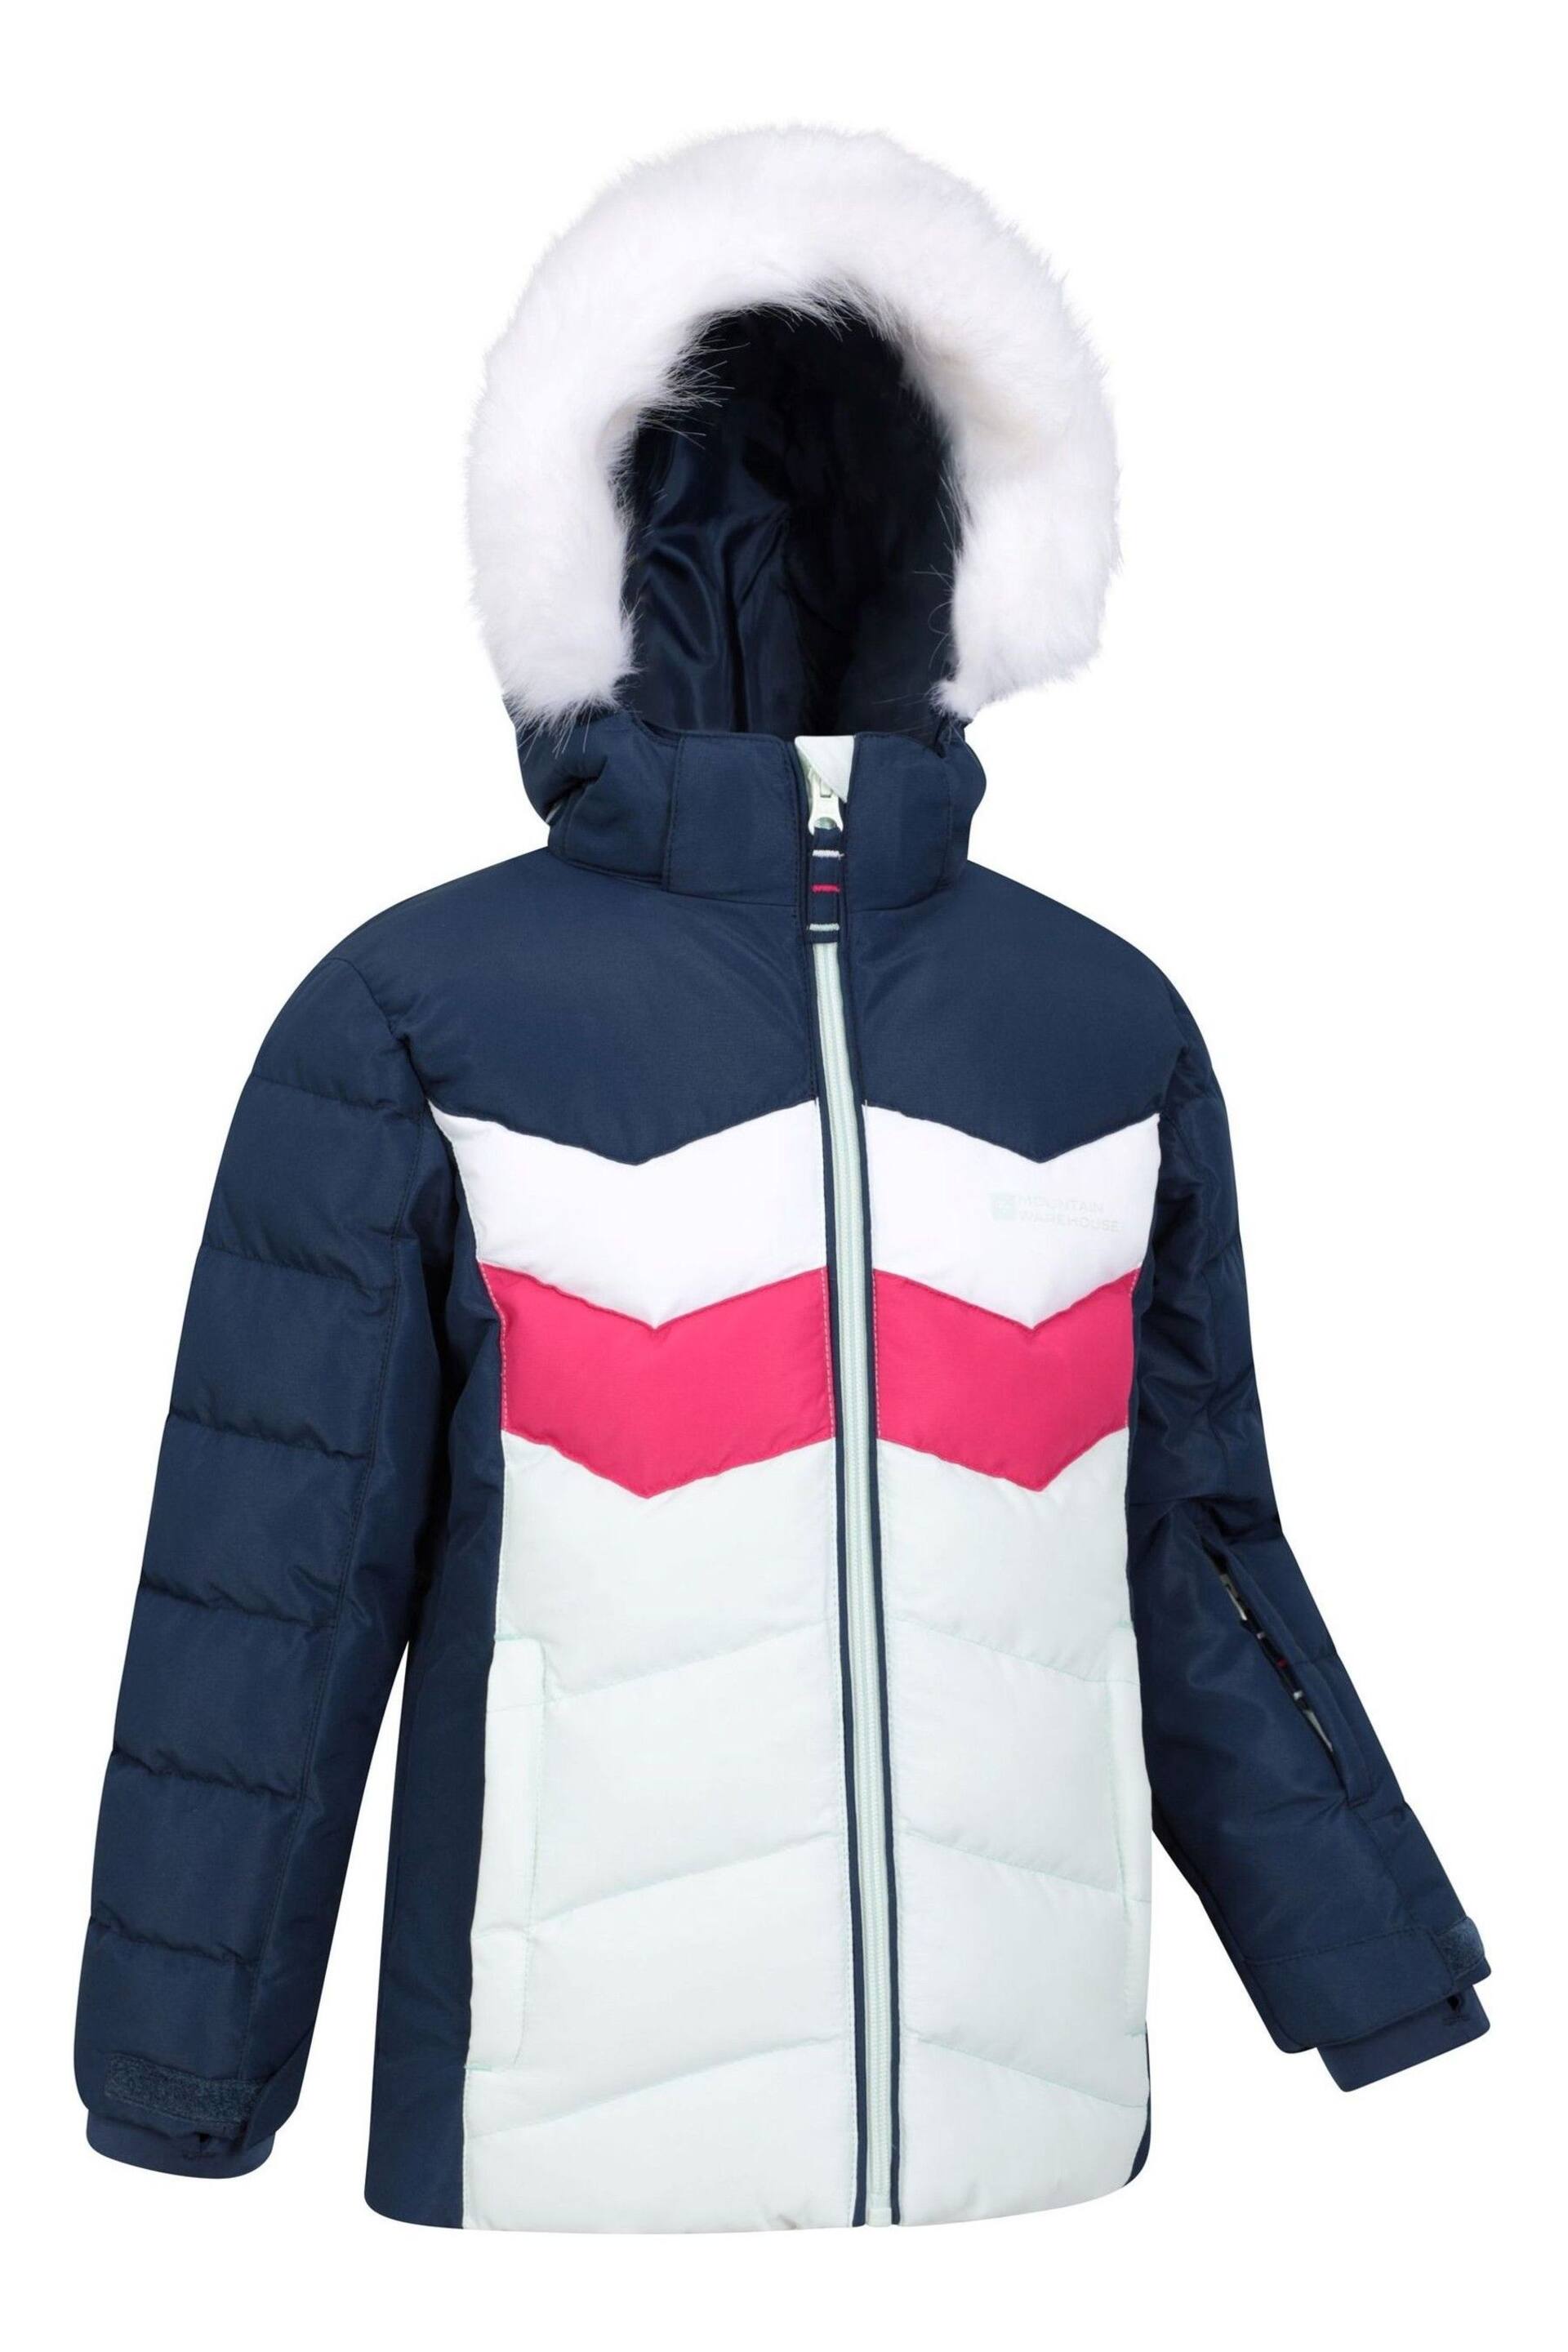 Mountain Warehouse Grey Kids Arctic Water Resistant Ski Jacket - Image 1 of 5